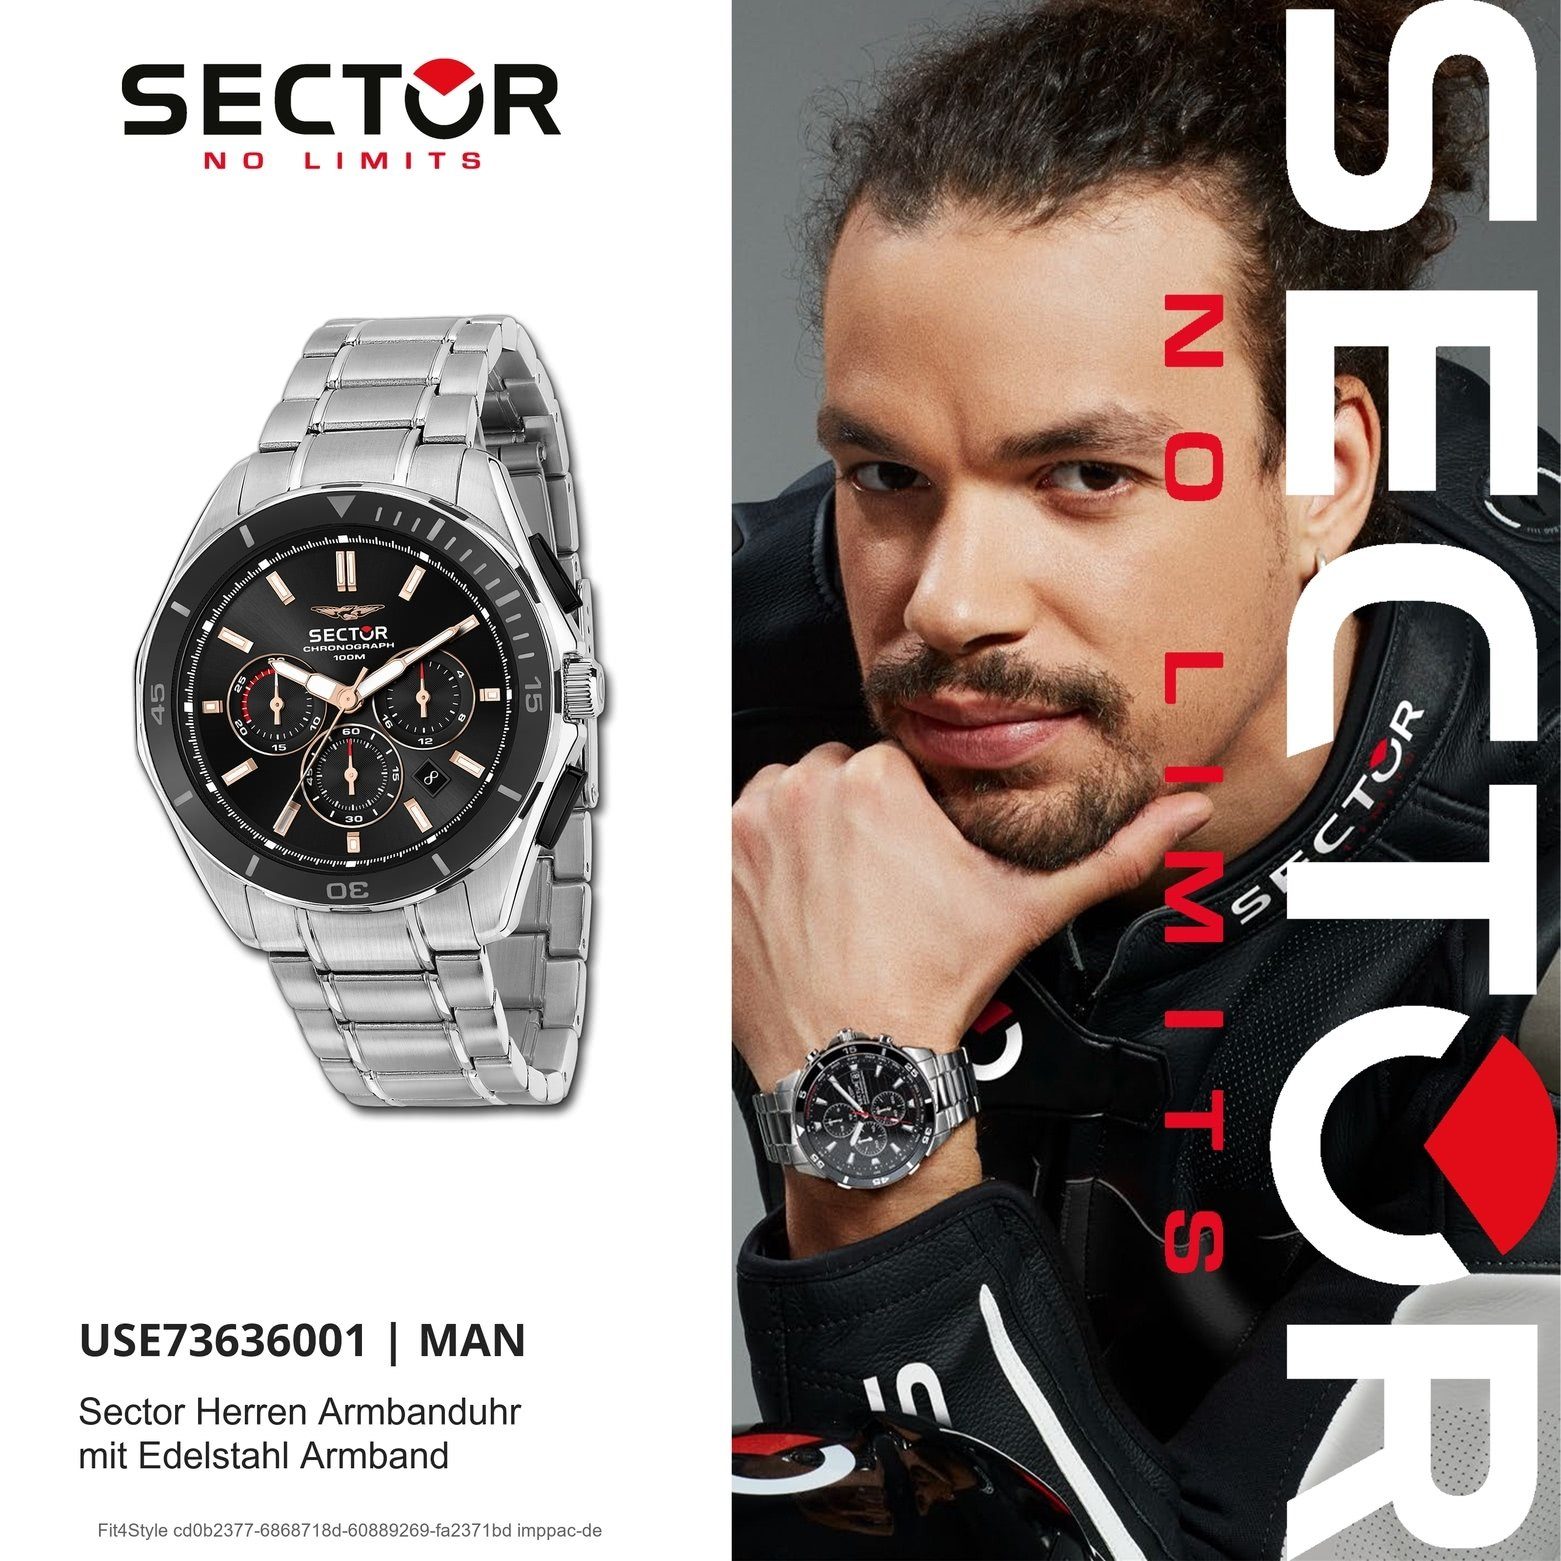 rund, Armbanduhr Chronograph Herren Edelstahlarmband Sector Sector Armbanduhr (45mm), groß Chrono, silber, Herren Fashion